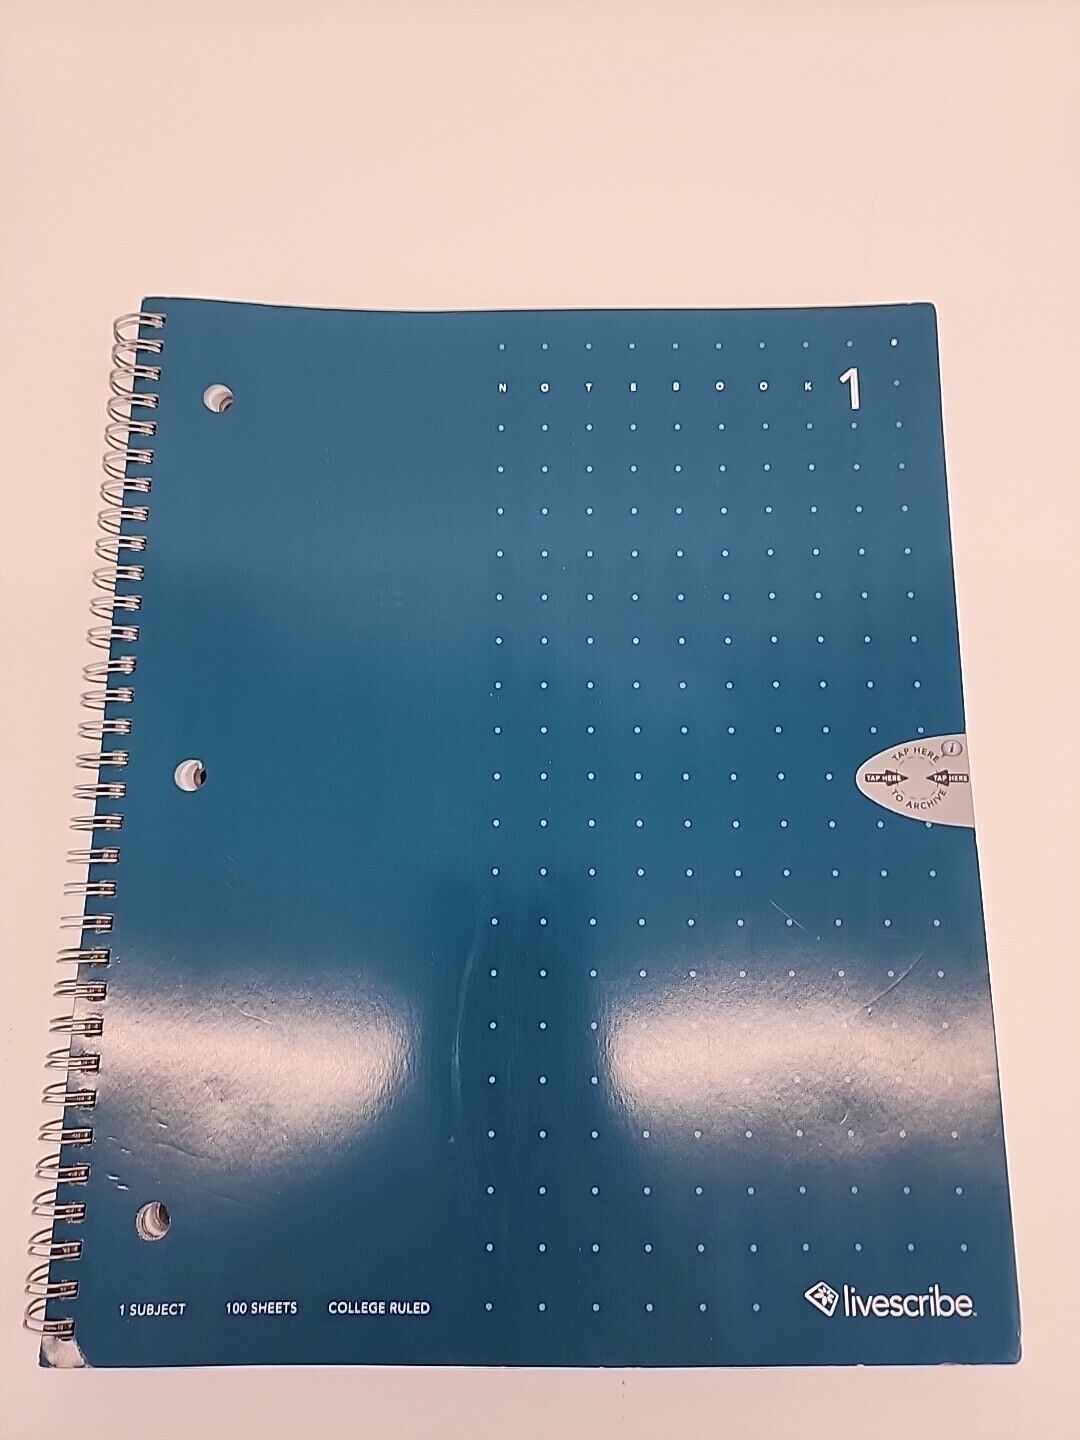 New, Sealed Livescribe 8.5 x 11 Single Subject Notebook 100 Sheet Notebook #1